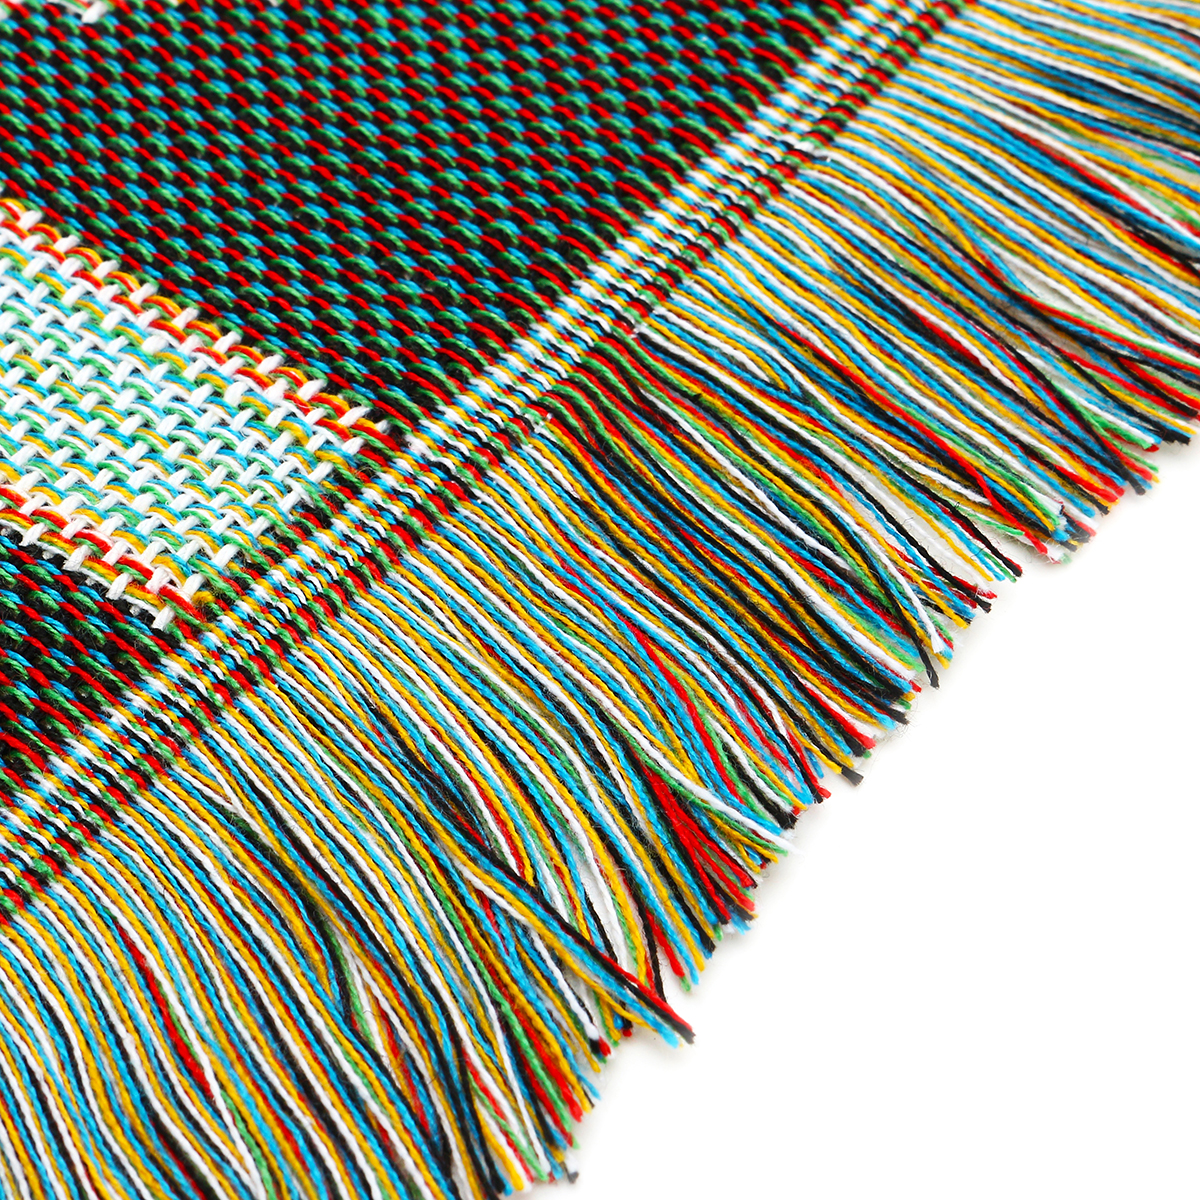 Retro-Navajo-American-Style-Geometric-Popcap-Upholstery-Leisure-Carpet-Air-Conditioning-Sofa-Blanket-1634170-6